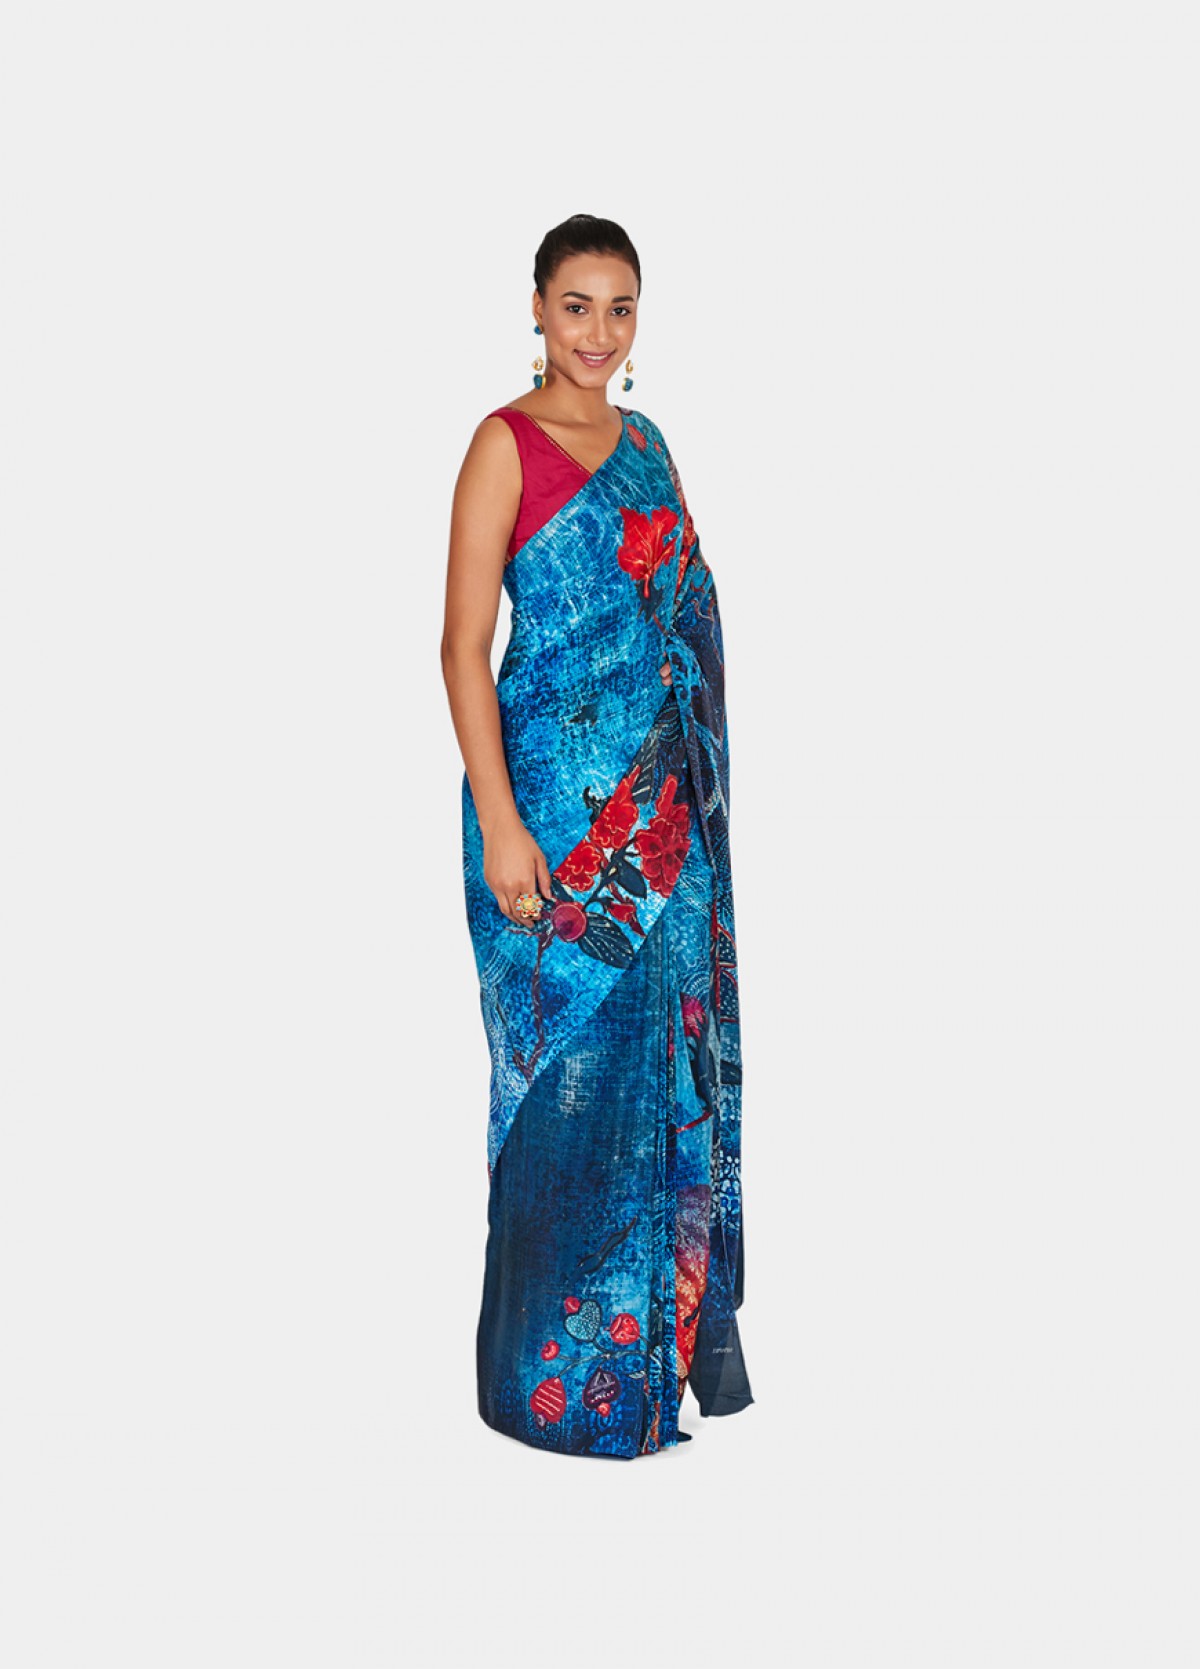 The Chintz Magic Sari